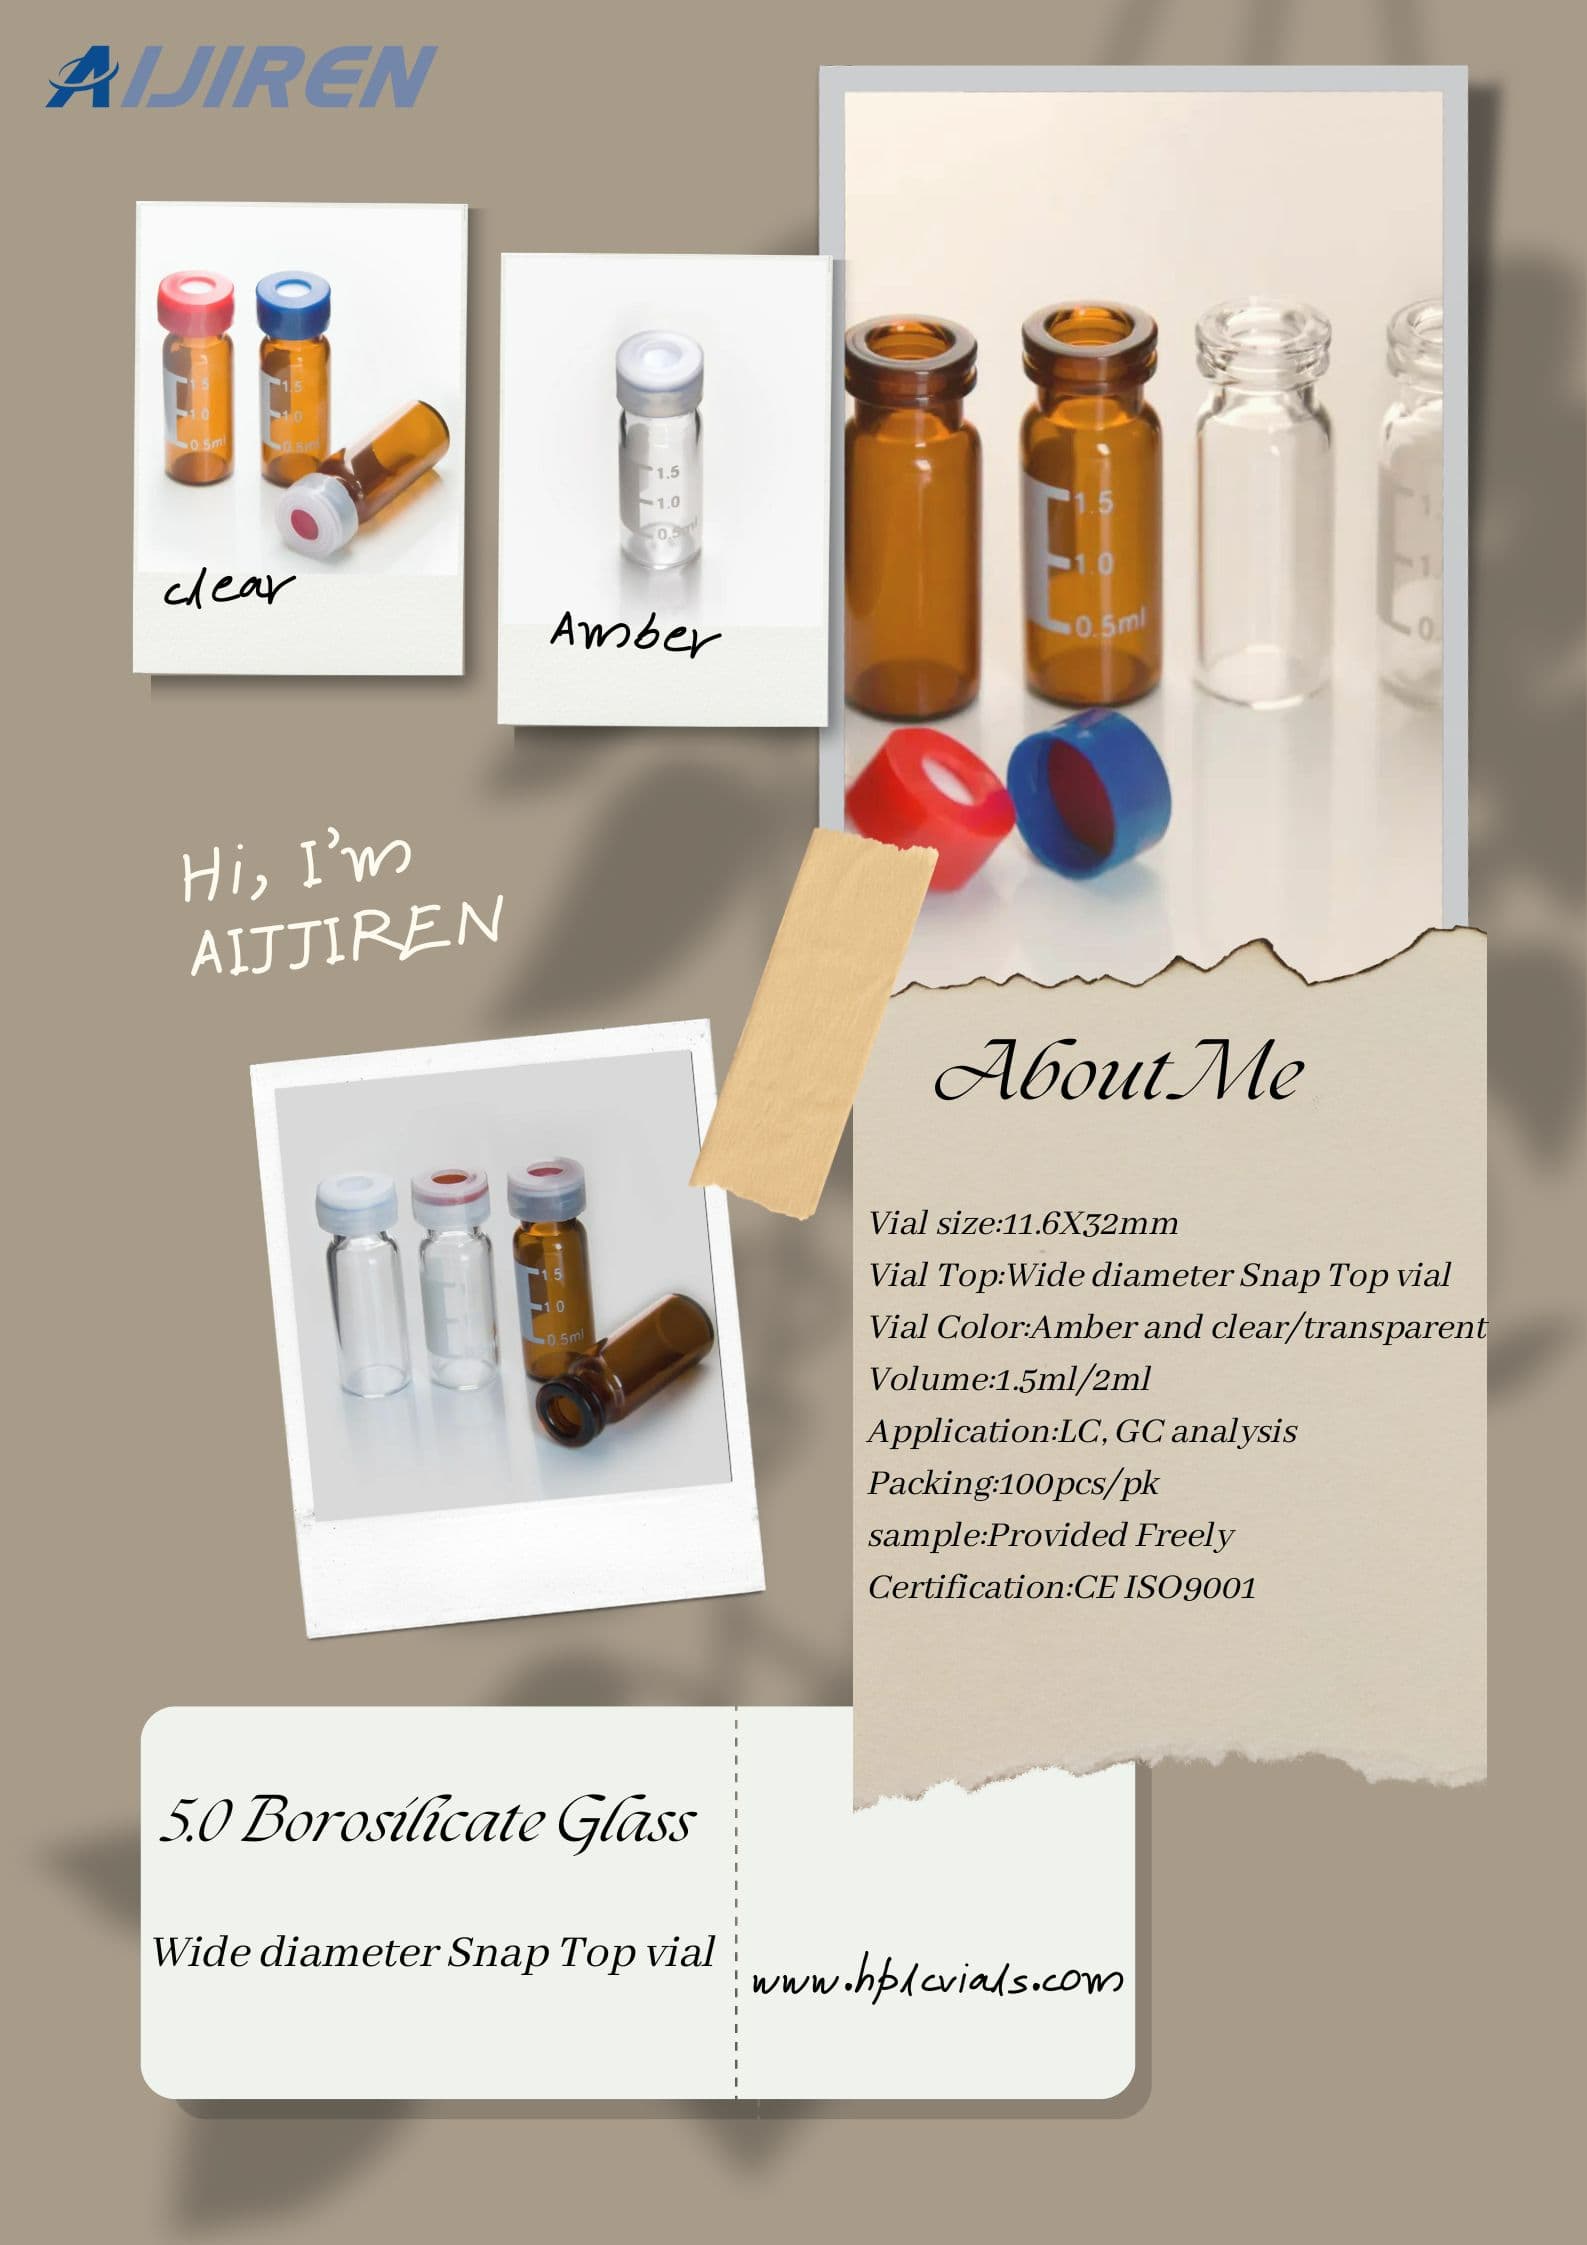 Laboratory Bottle 2ml Snap hplc 5.0 Borosilicate Glass Vials